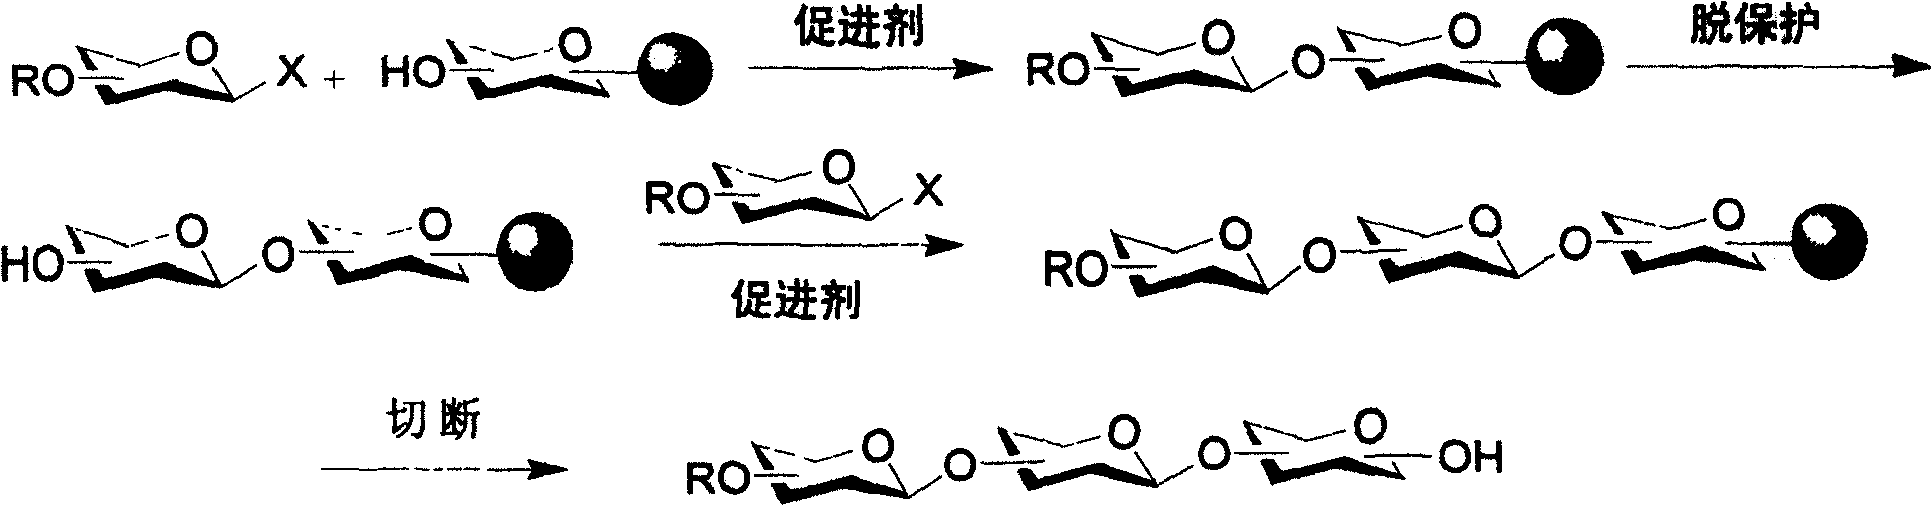 Iterative oligosaccharide synthesis